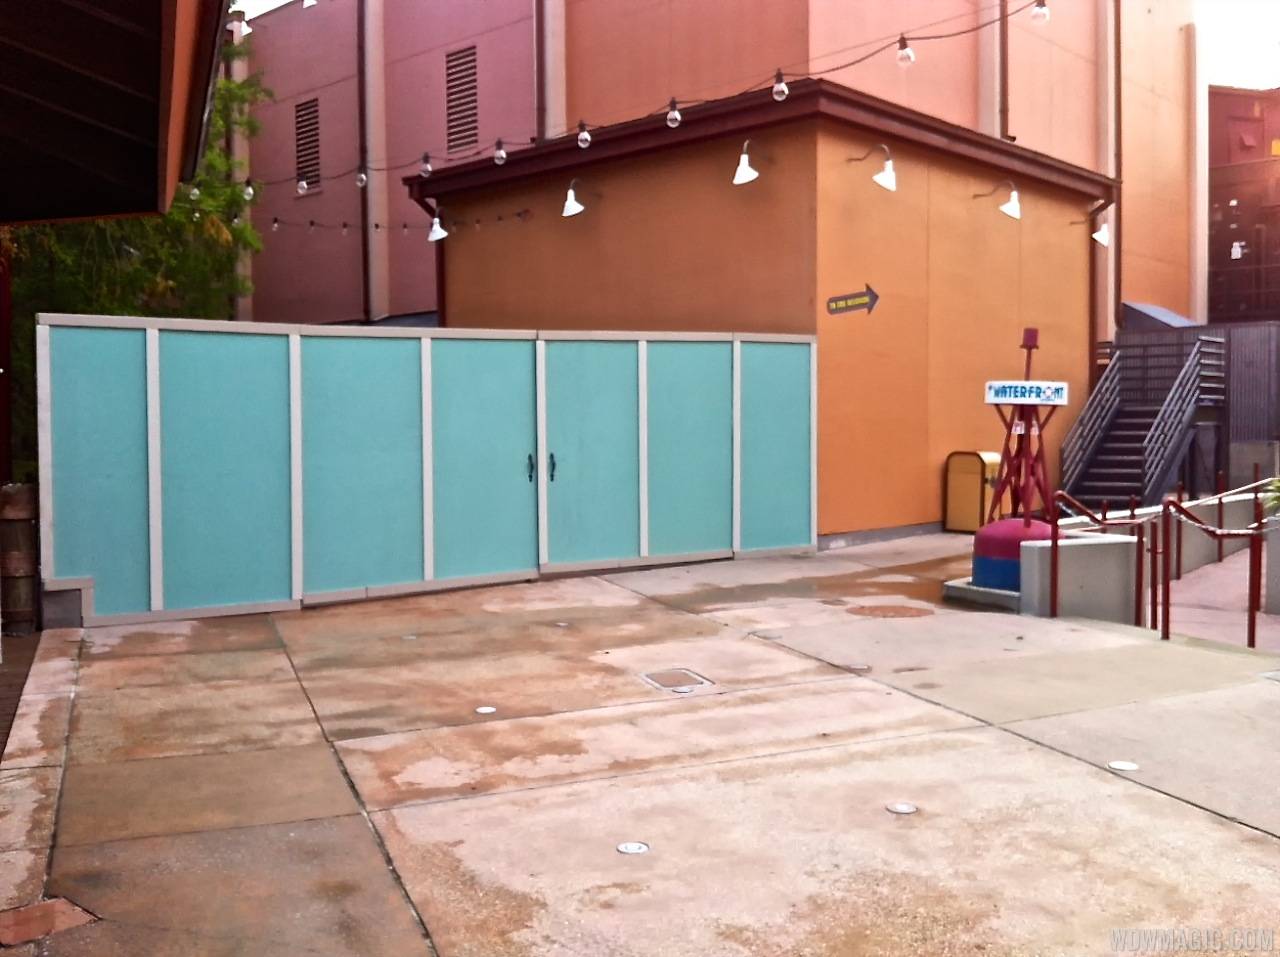 More Disney Springs construction walls